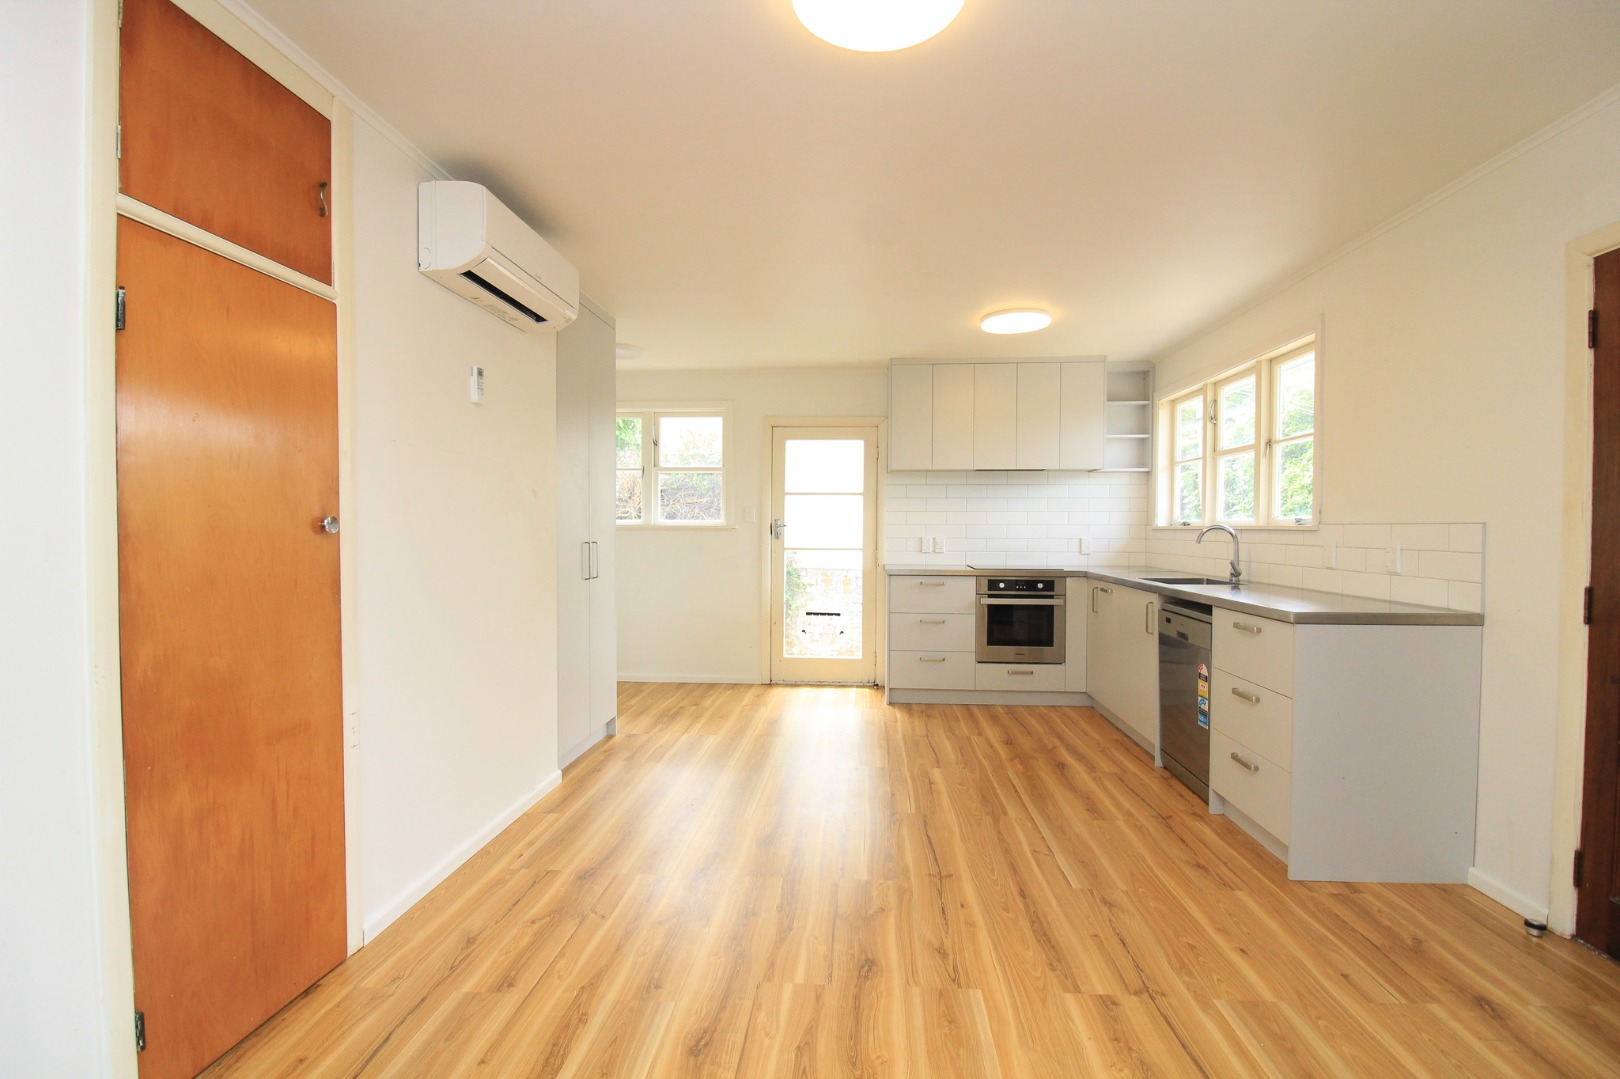 Real Estate For Rent Houses & Apartments : Arapiko!, Wellington